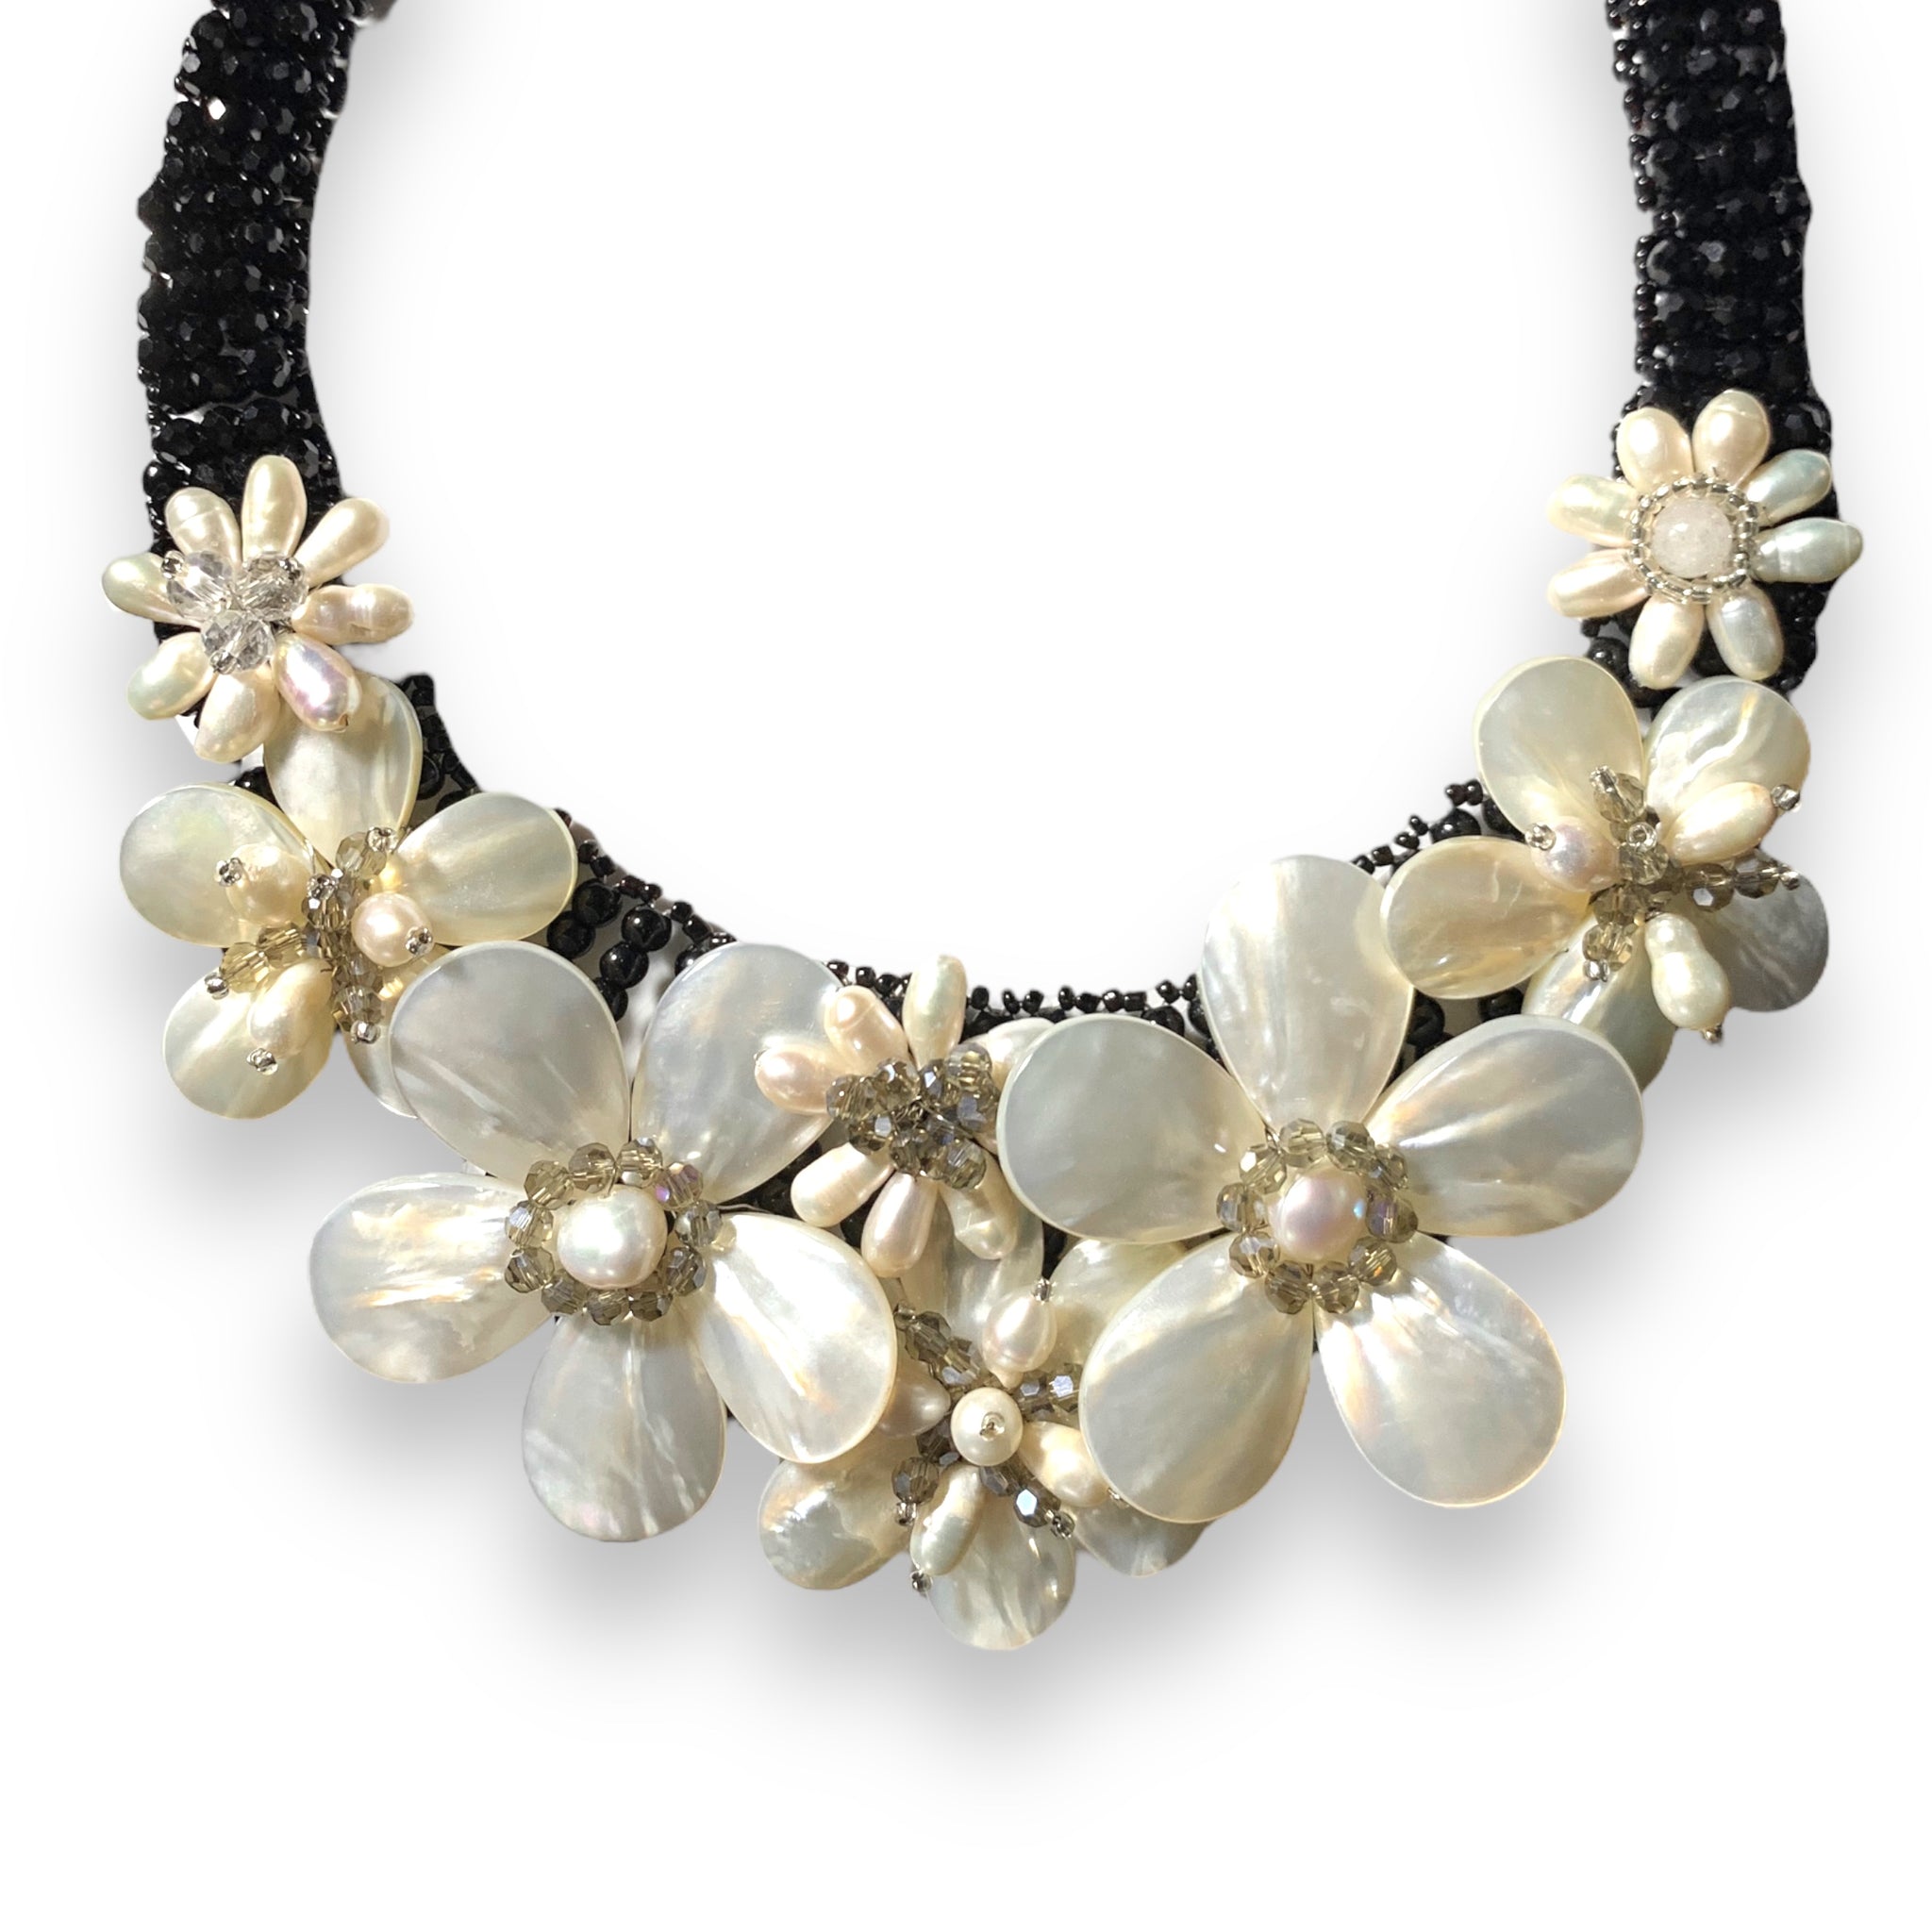 Handmade Choker 20" Unique Black Onyx Sea Shells Floral Bib Necklace